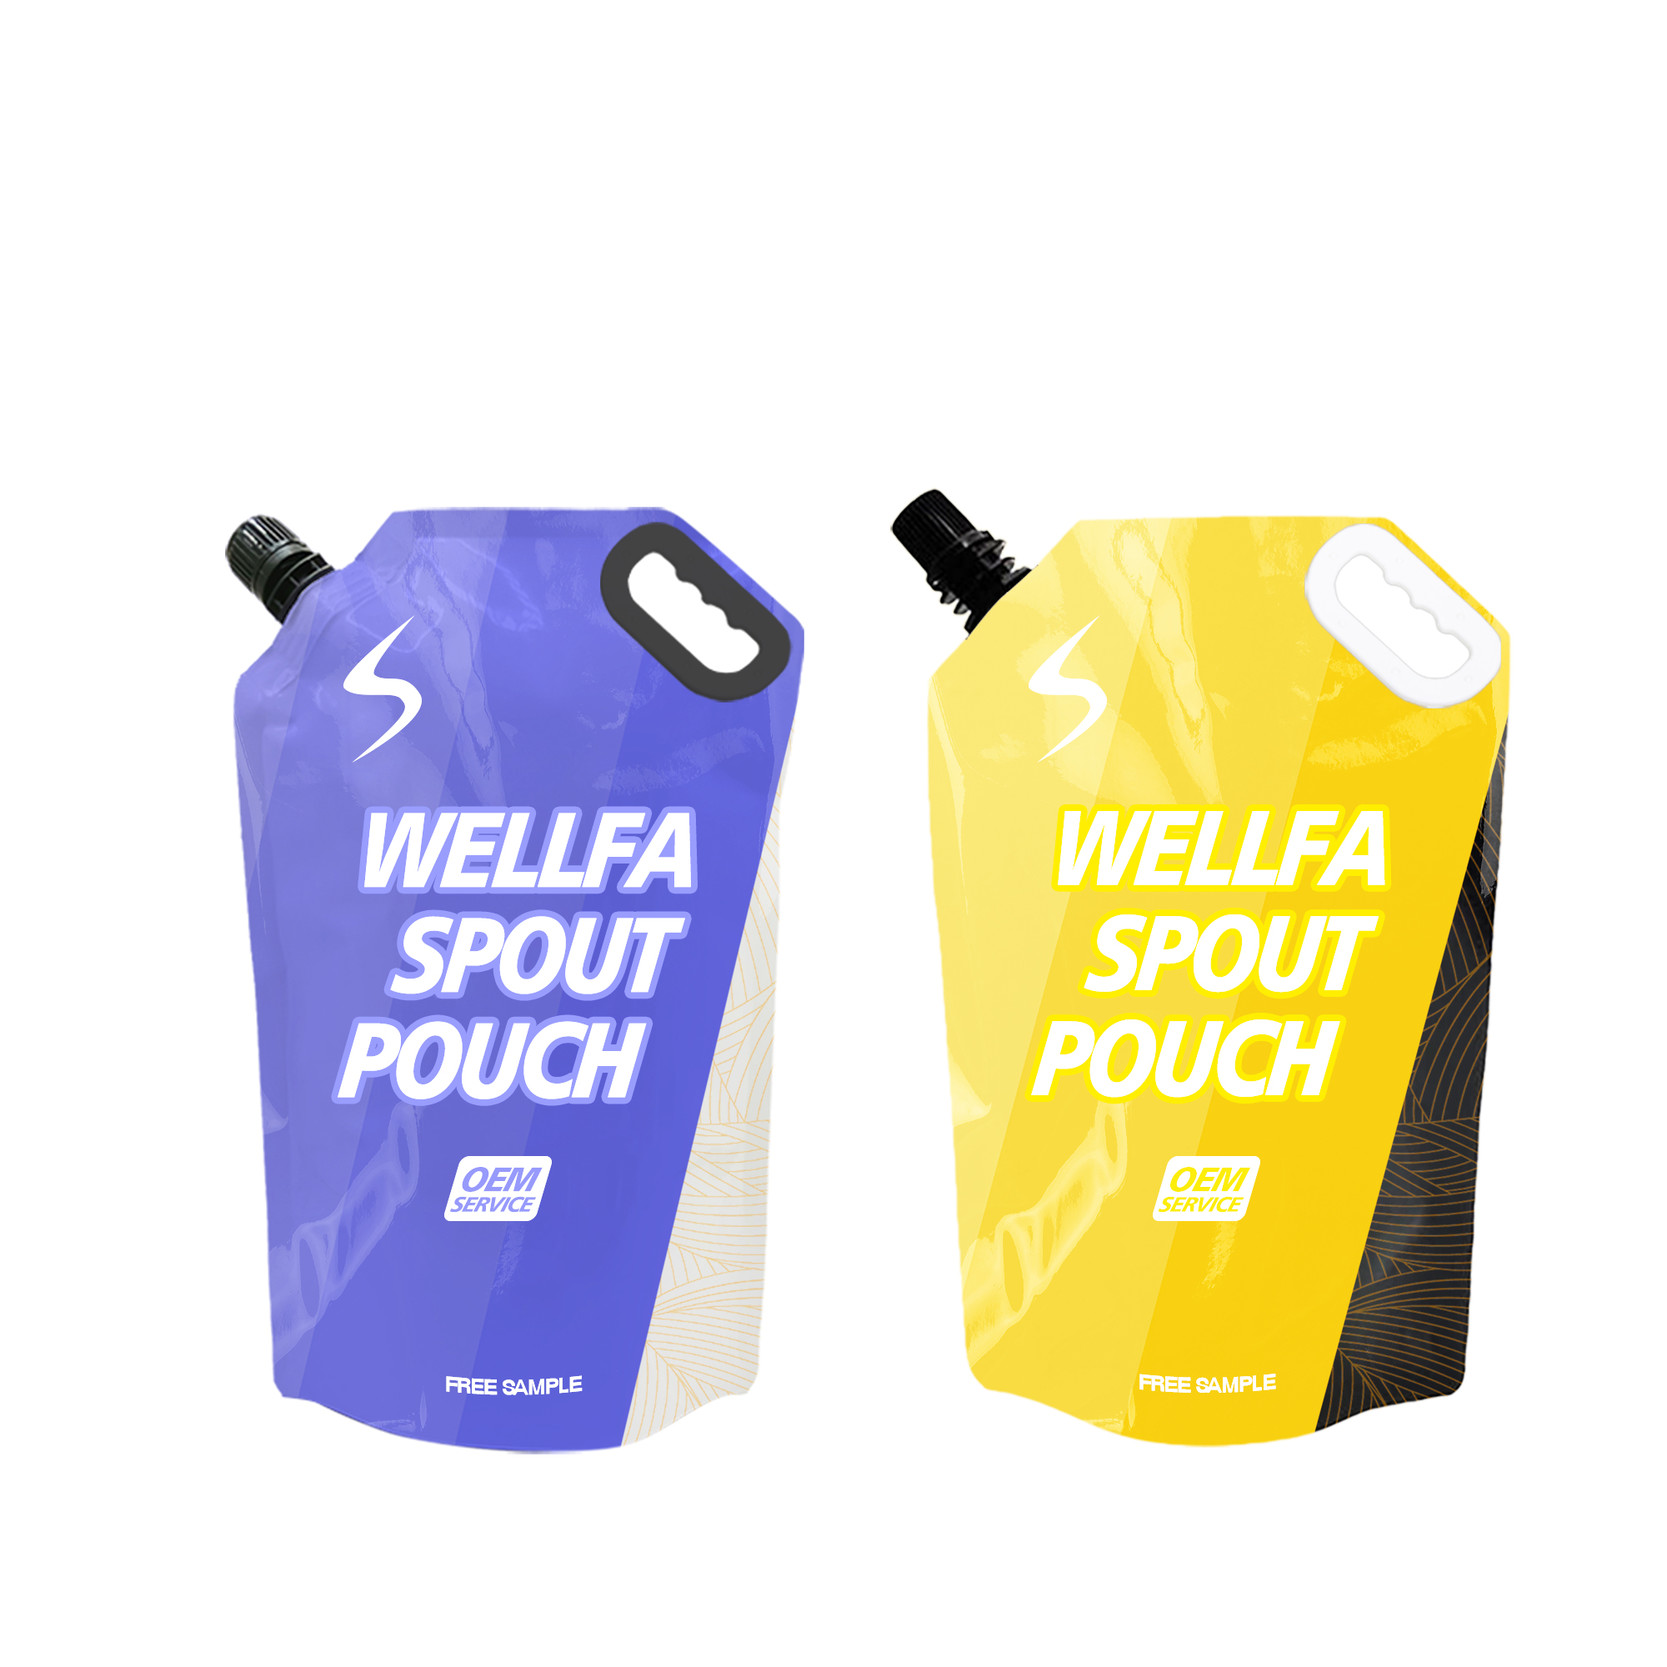 5 plastic liquid pouch